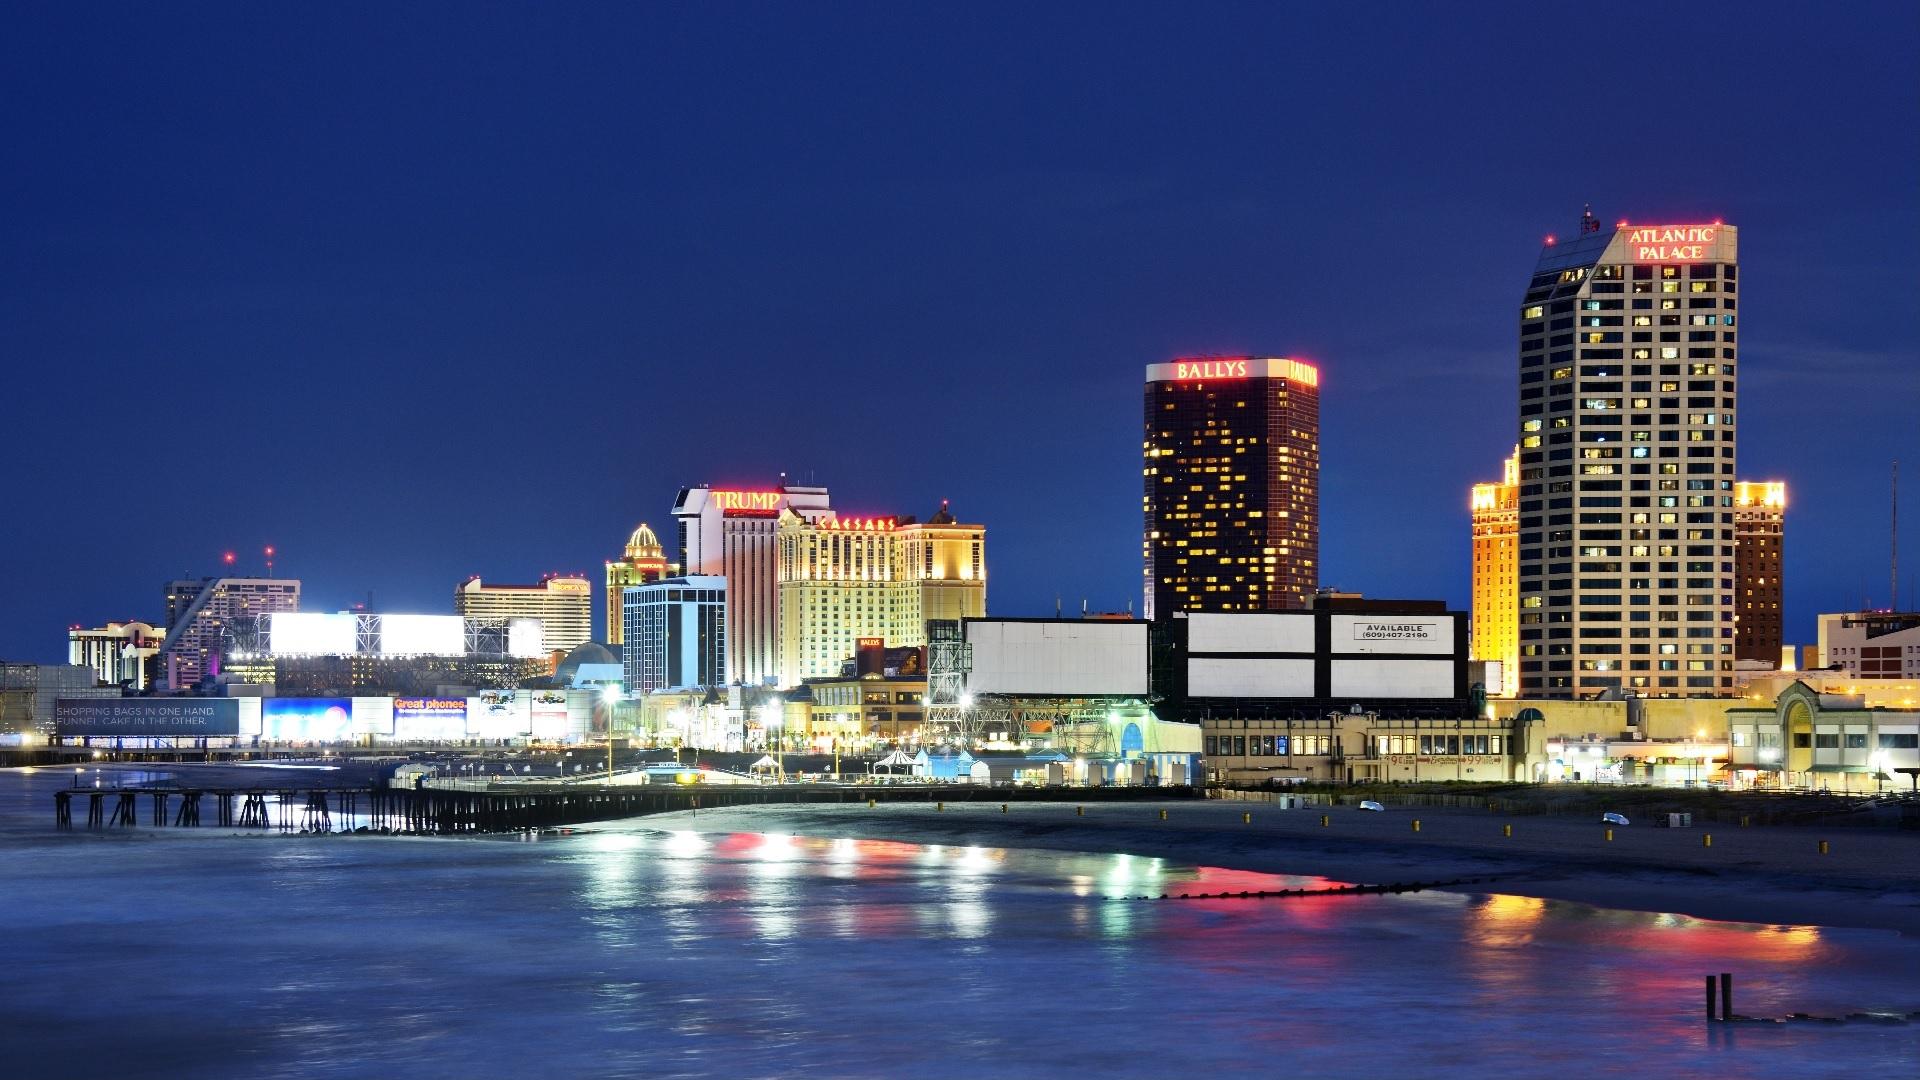 Atlantic City Casinos HD Wallpaper, Background Image